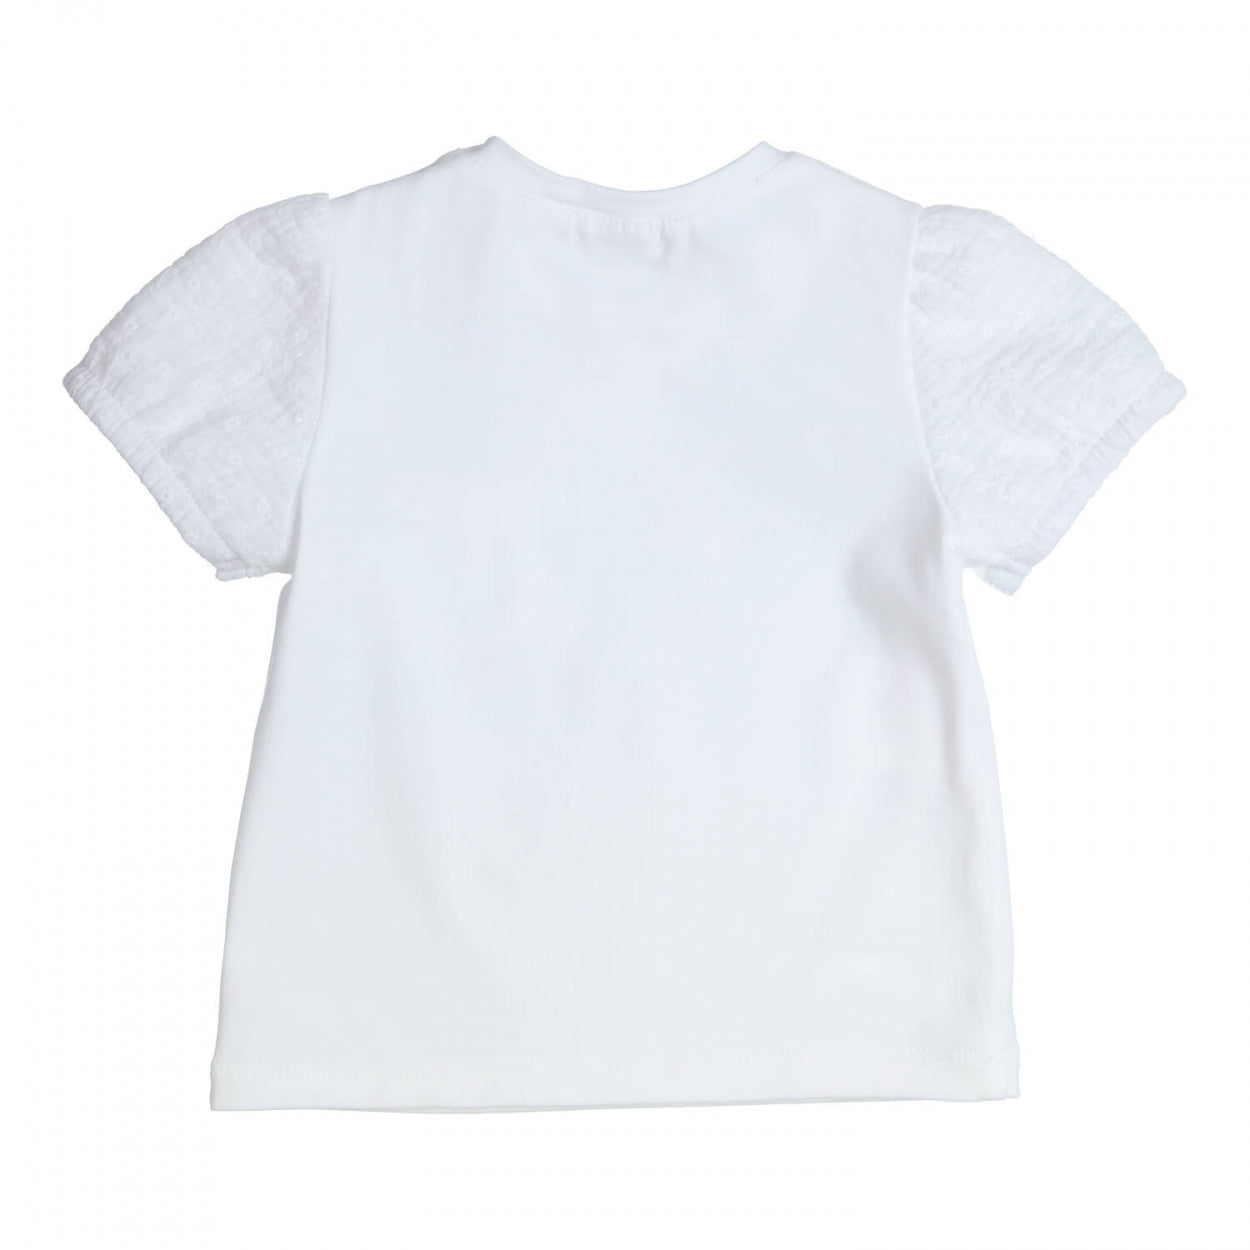 Meisjes T-shirt Aerobic van Gymp in de kleur White in maat 86.